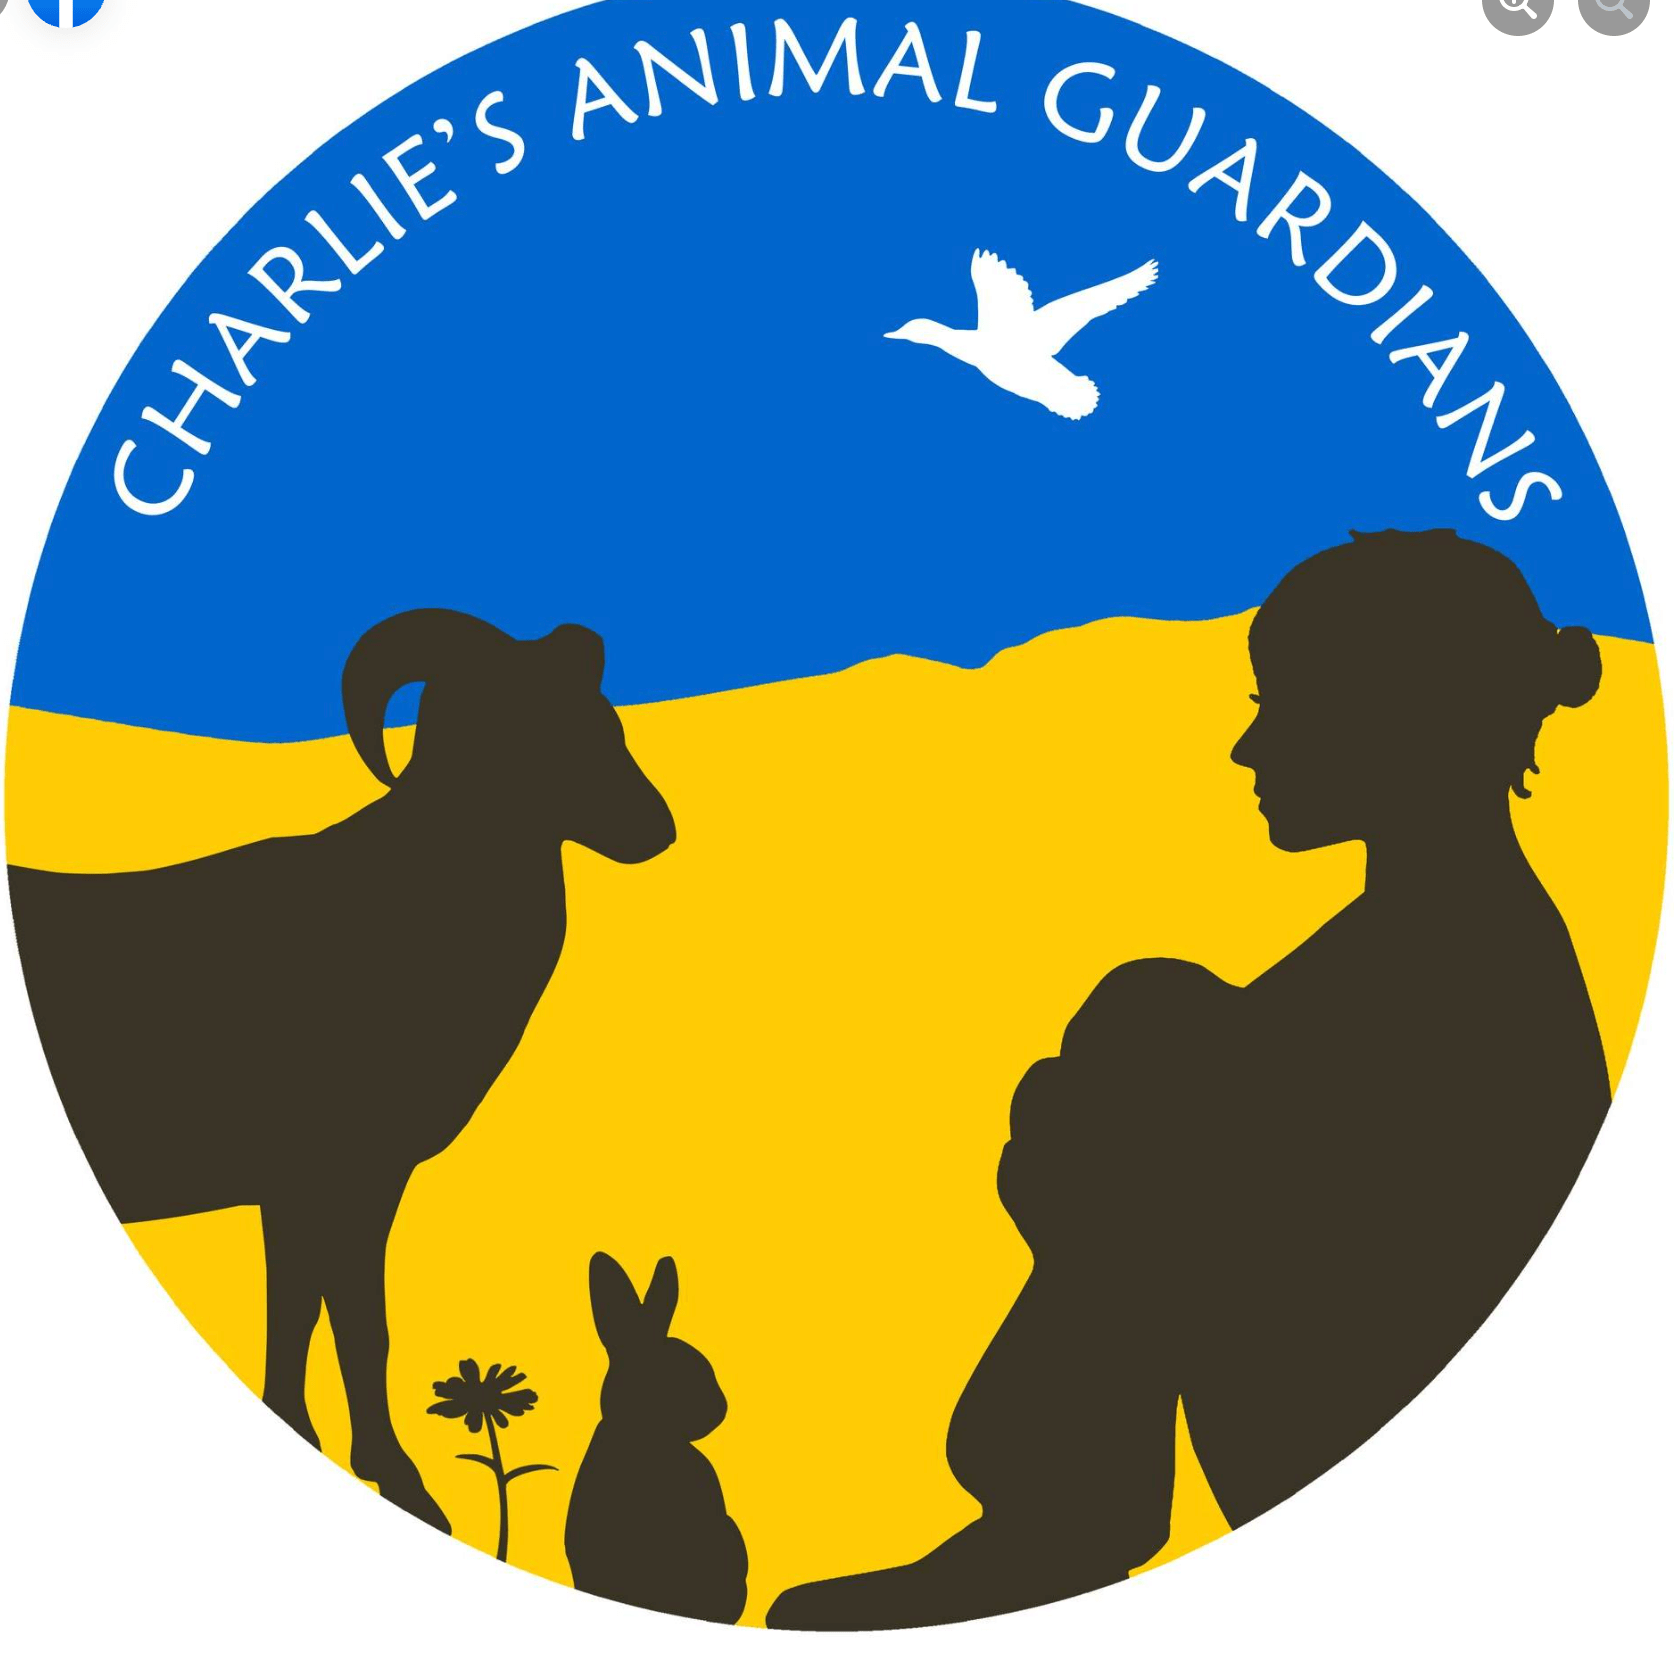 Charlie's Animal Guardians Association